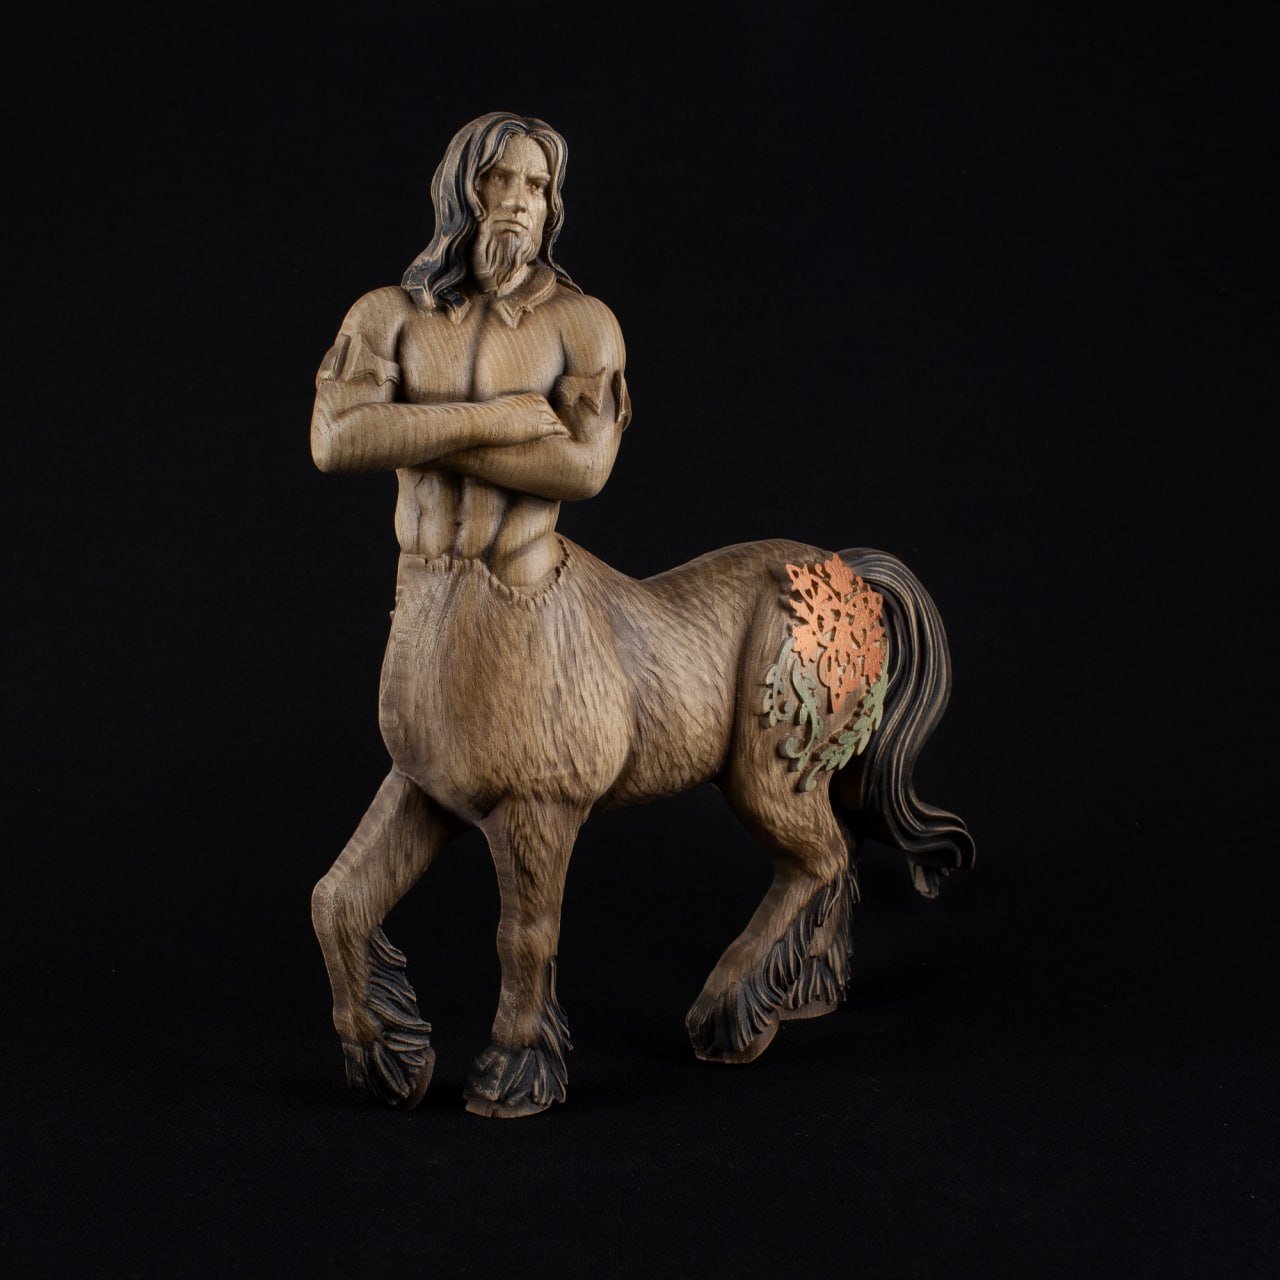 Majestic Centaur Statue: Grace and Power in Greek Mythology